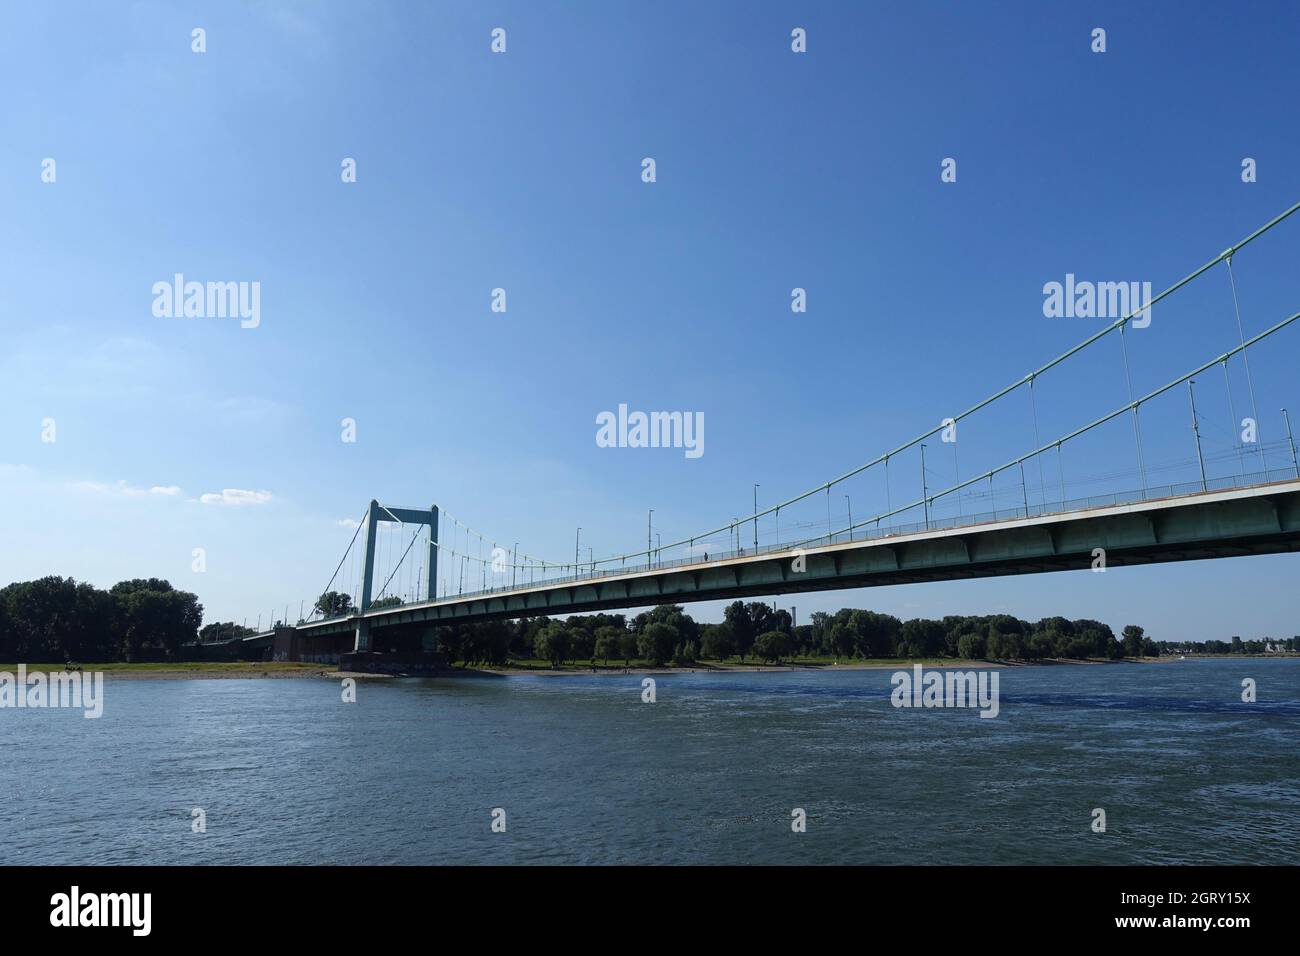 Bridge Over River Against Sky Stock Photo